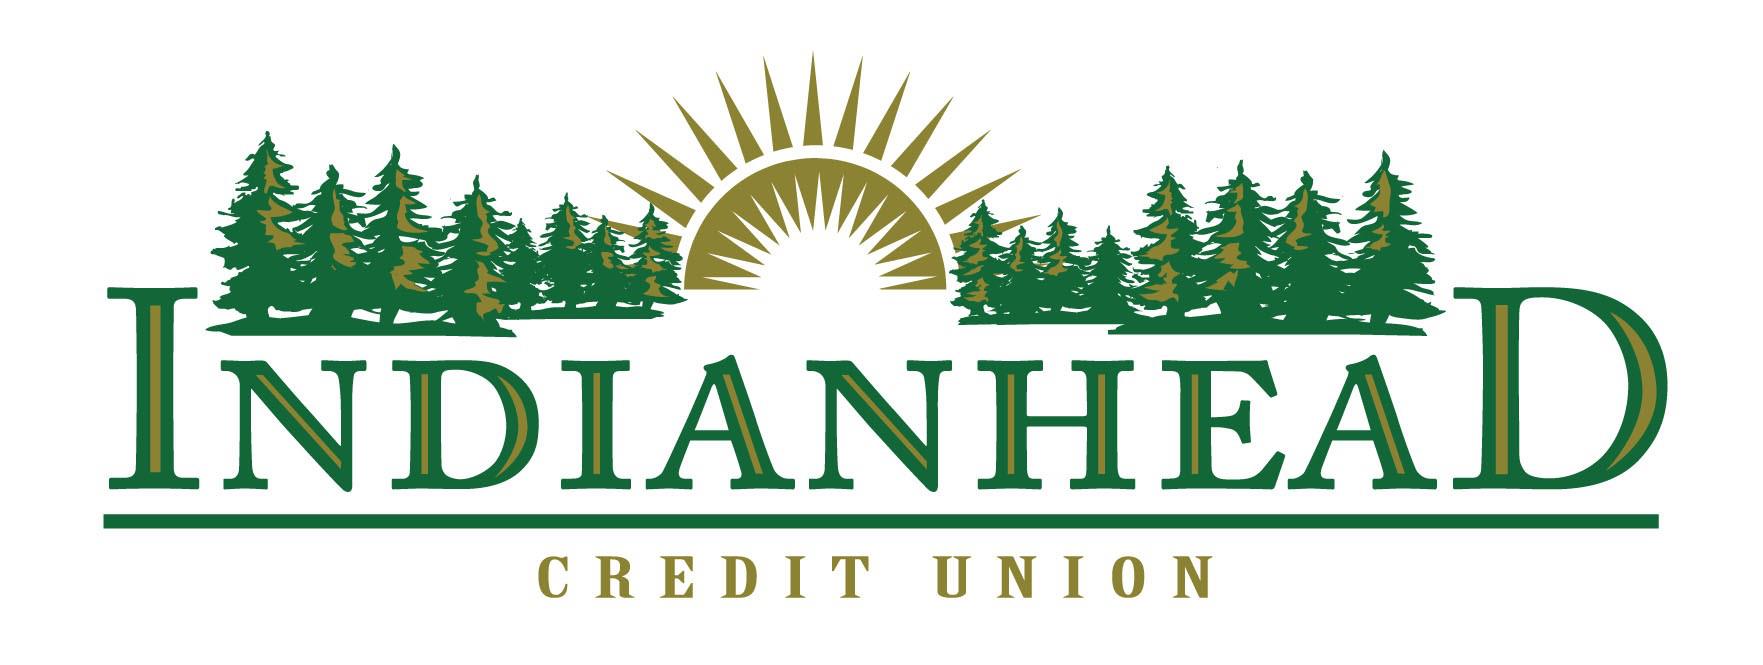 Indianhead Credit Union